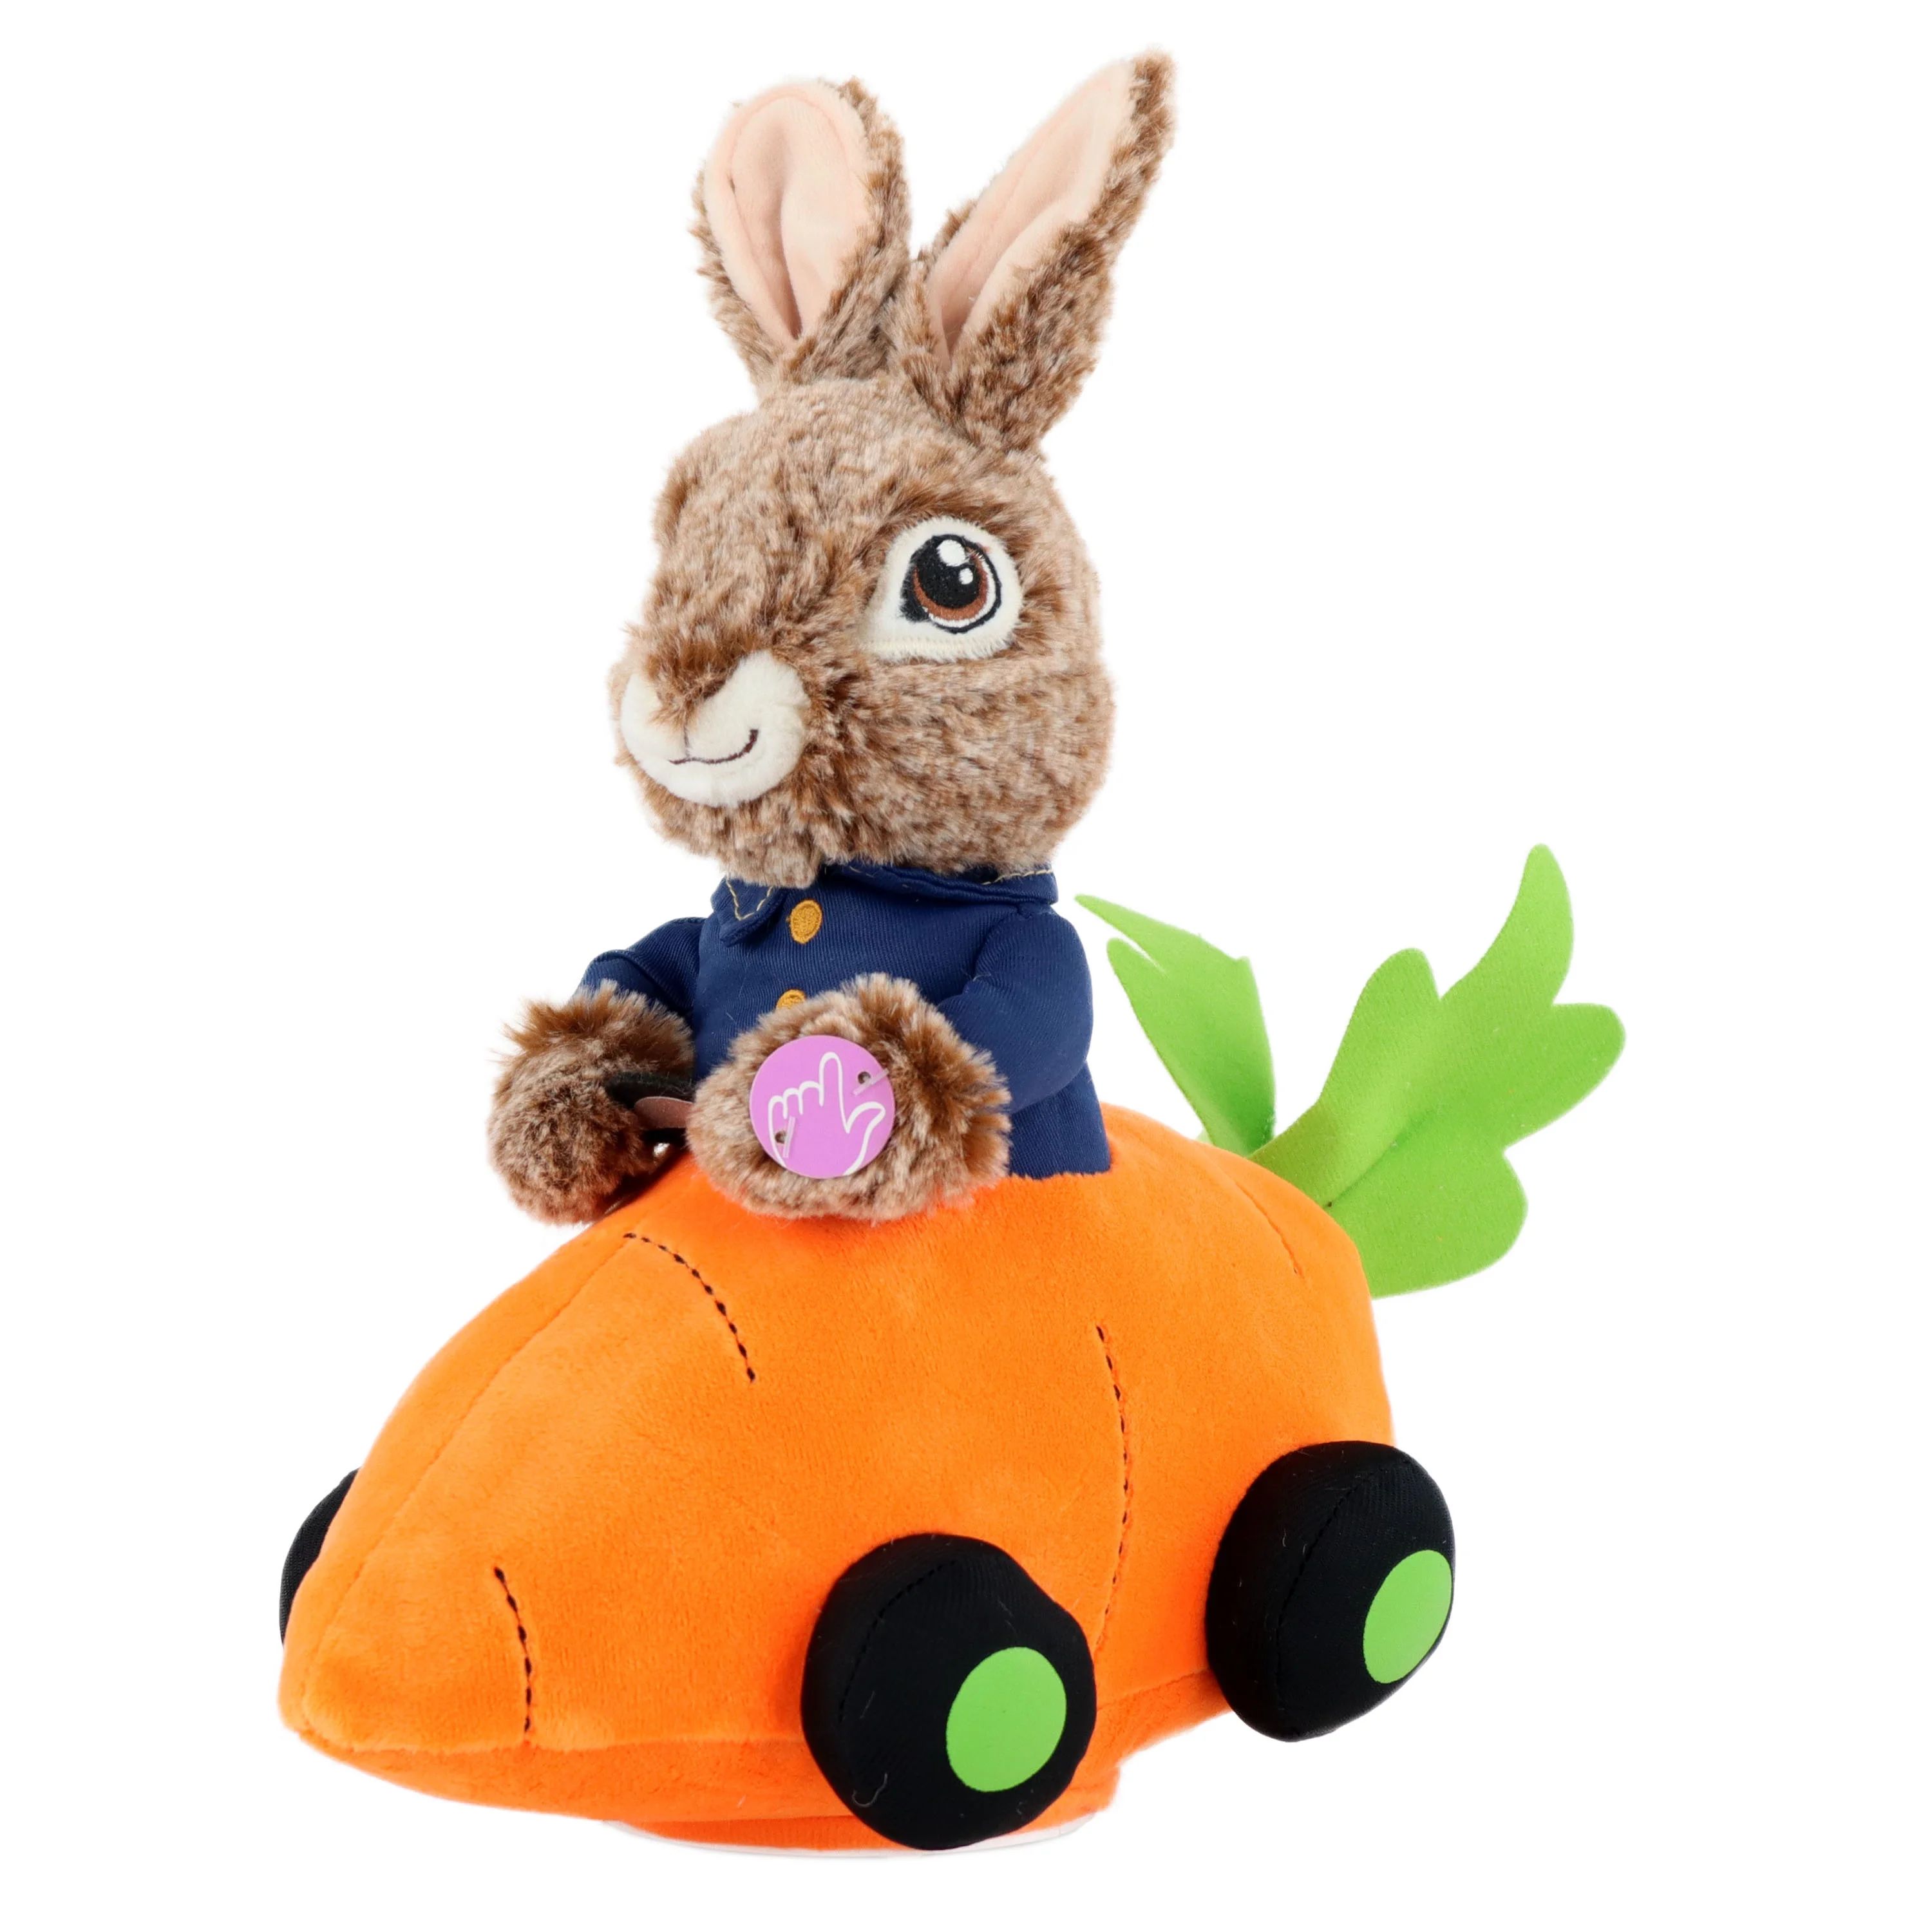 Peter Rabbit Small Animated Easter Plush Toy - Walmart.com | Walmart (US)